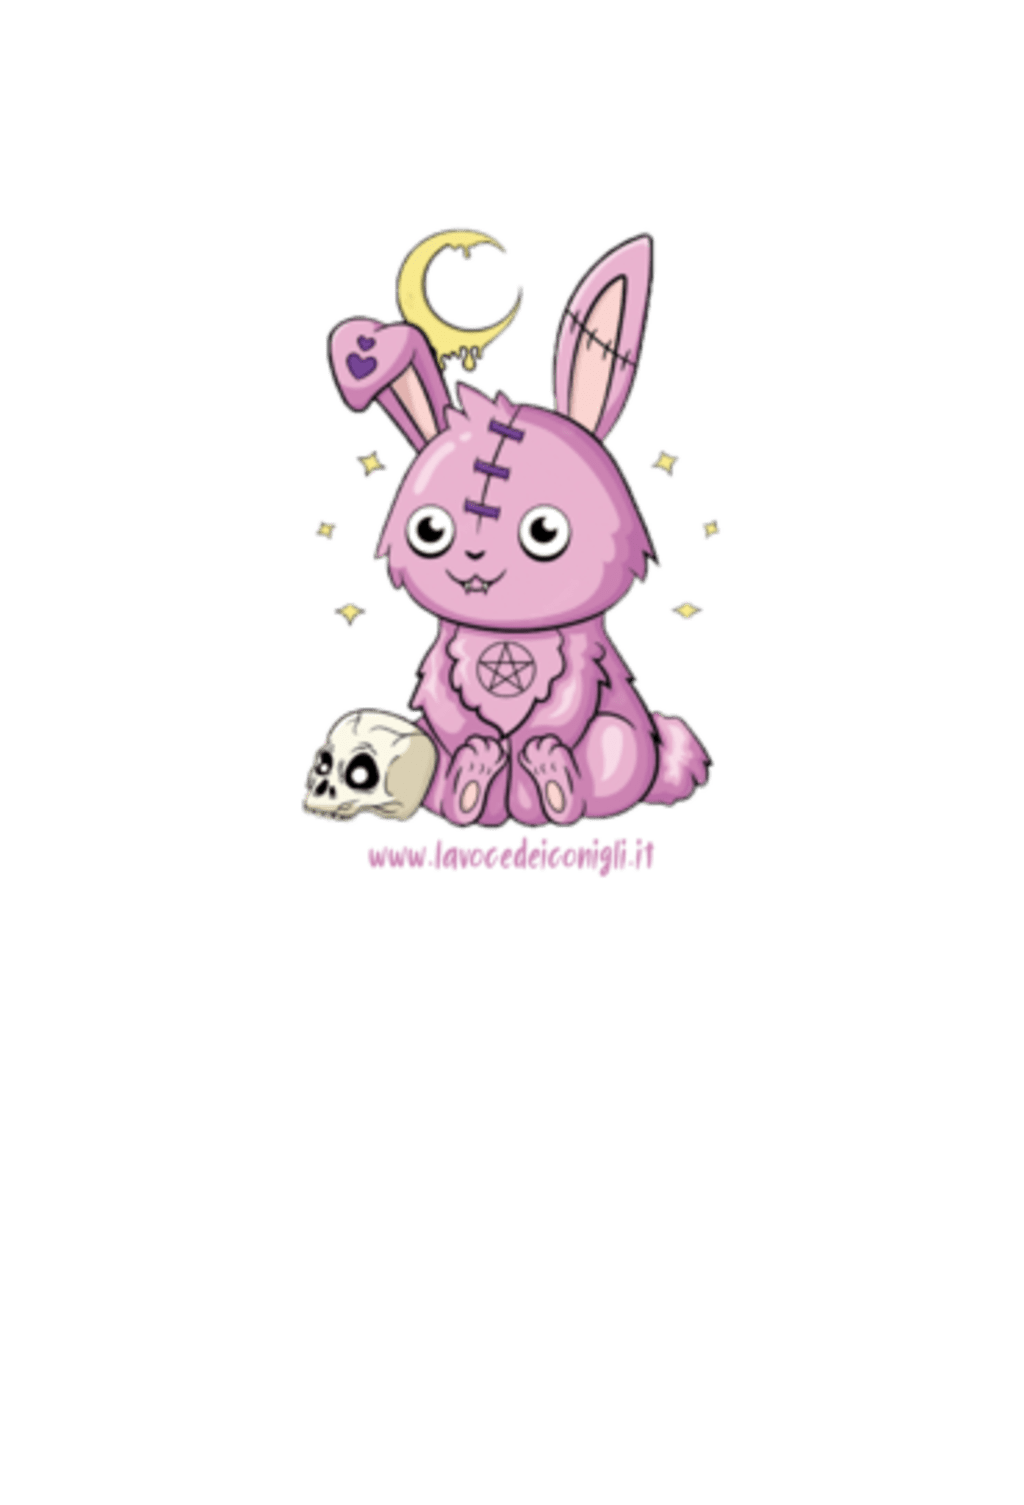 Rabbit pink